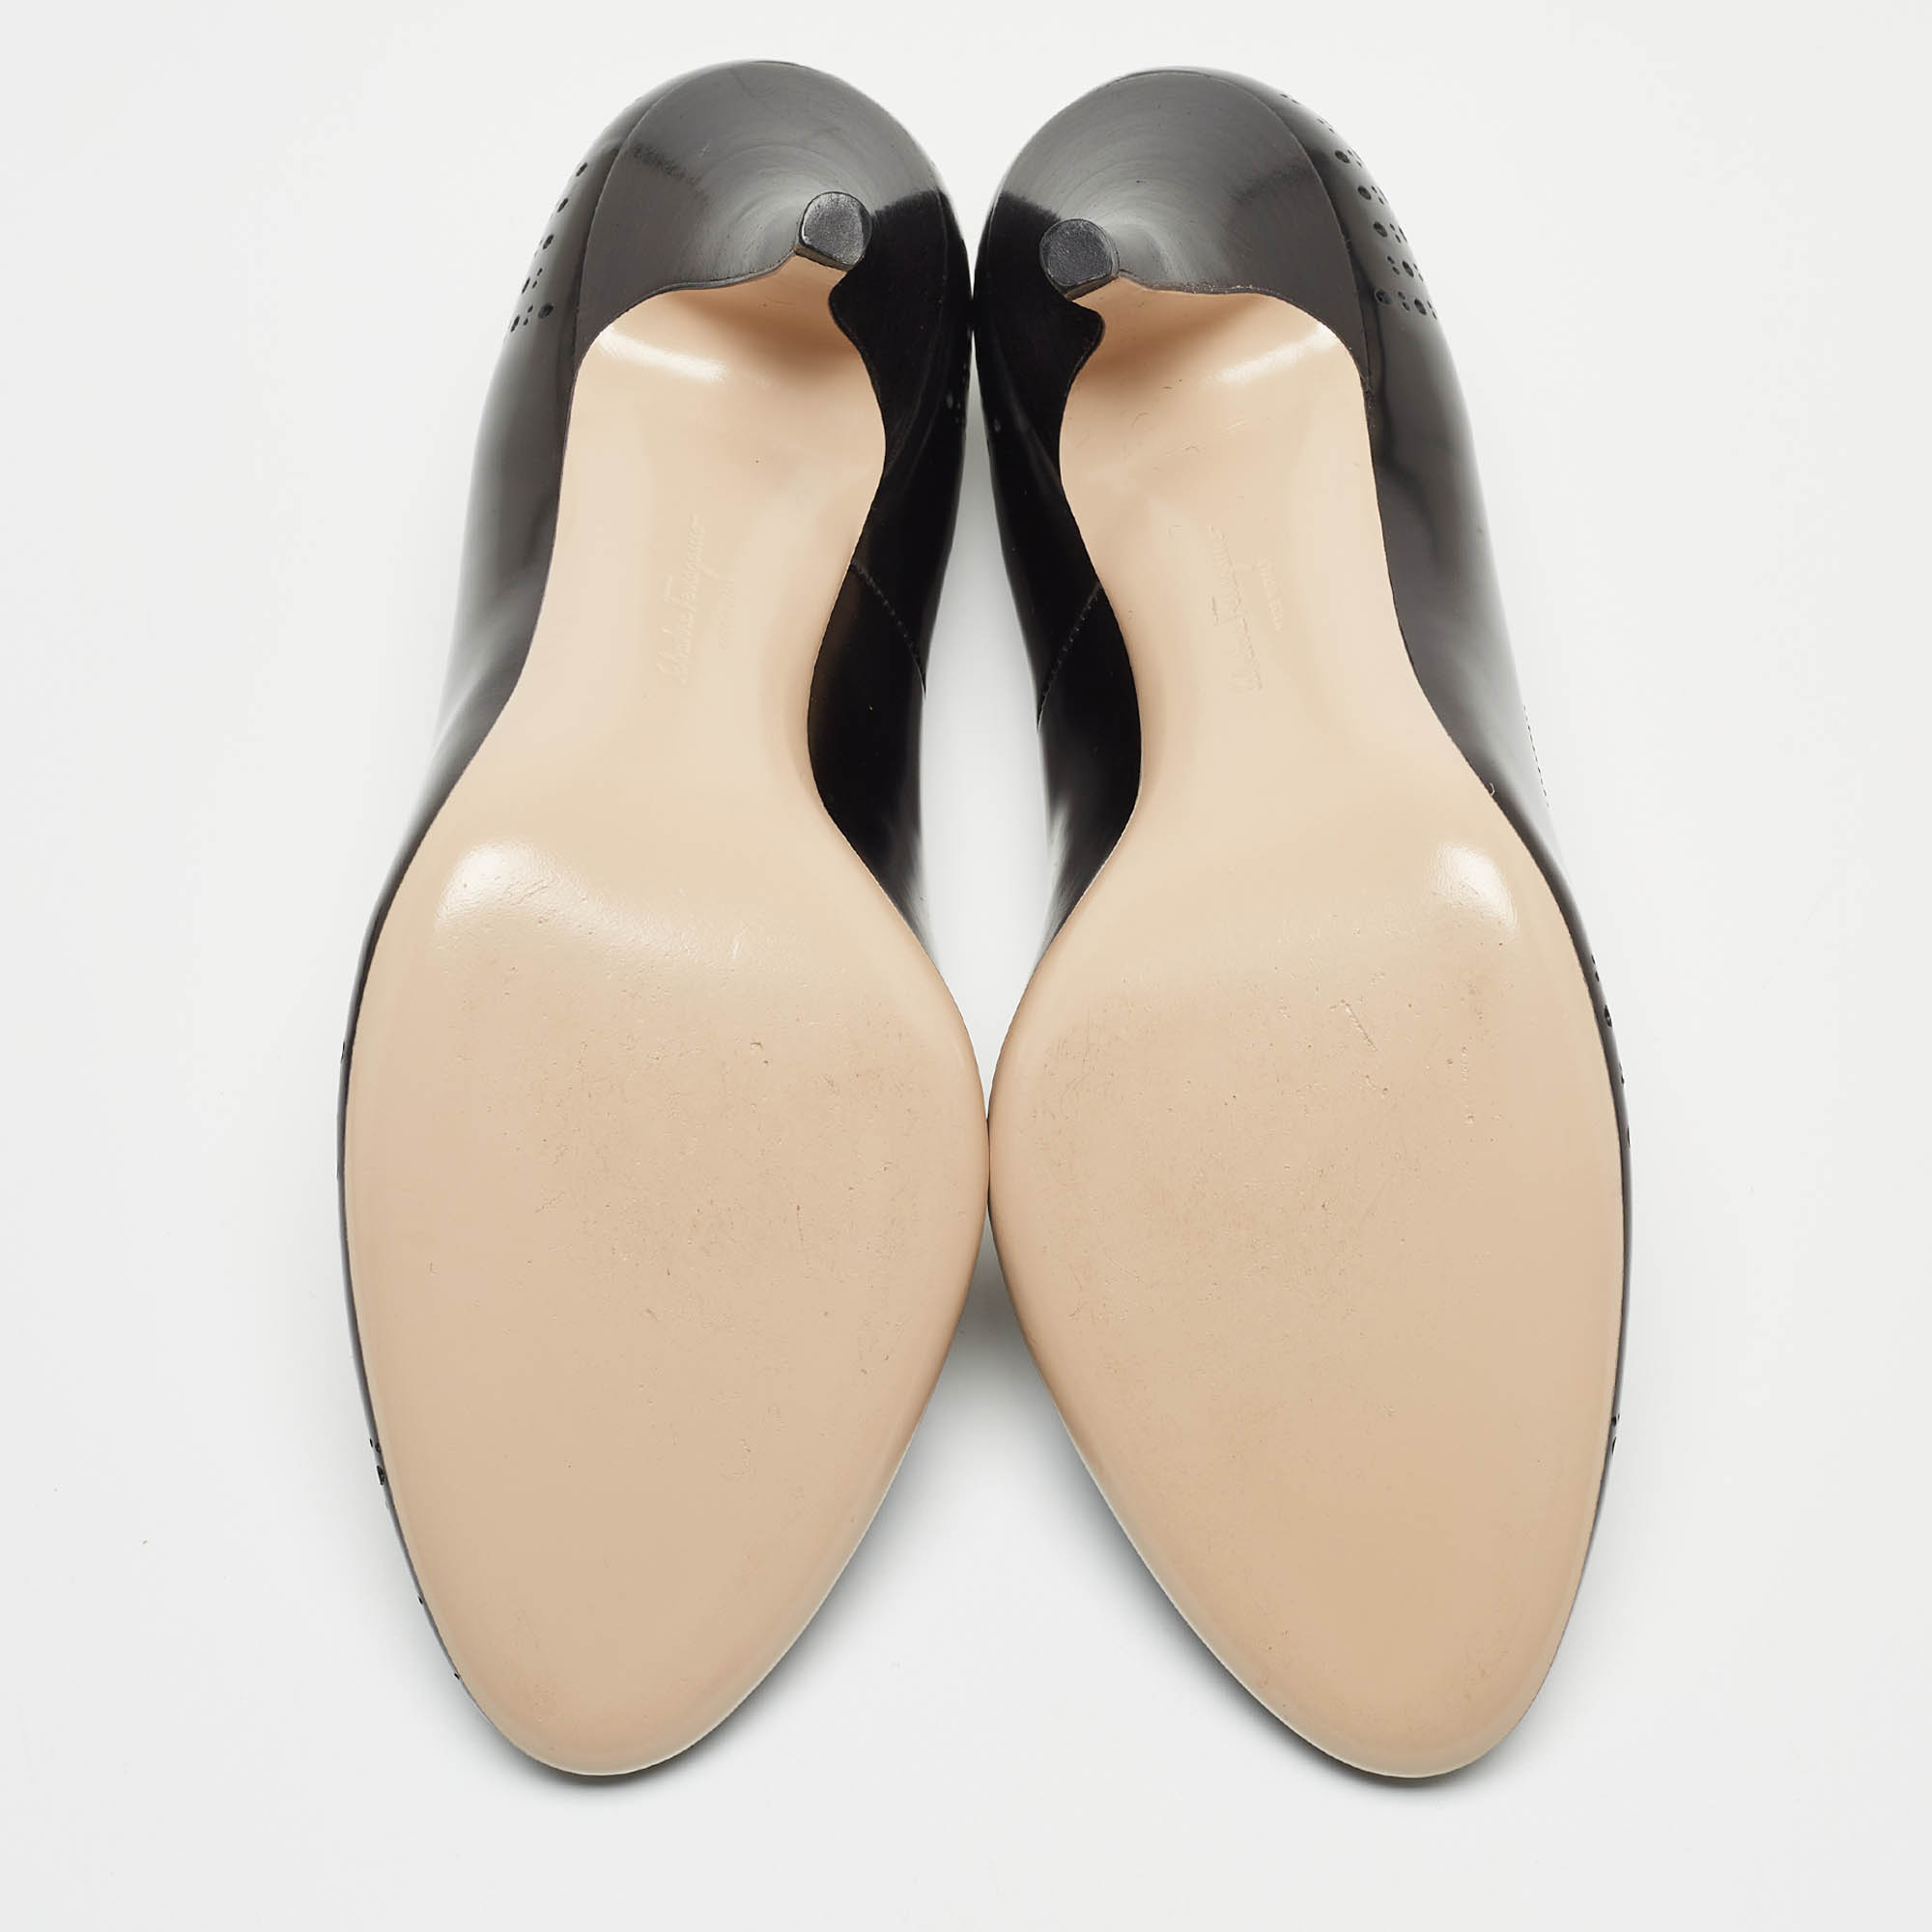 Salvatore Ferragamo Black Perforated Leather Round Toe Pumps Size 38.5